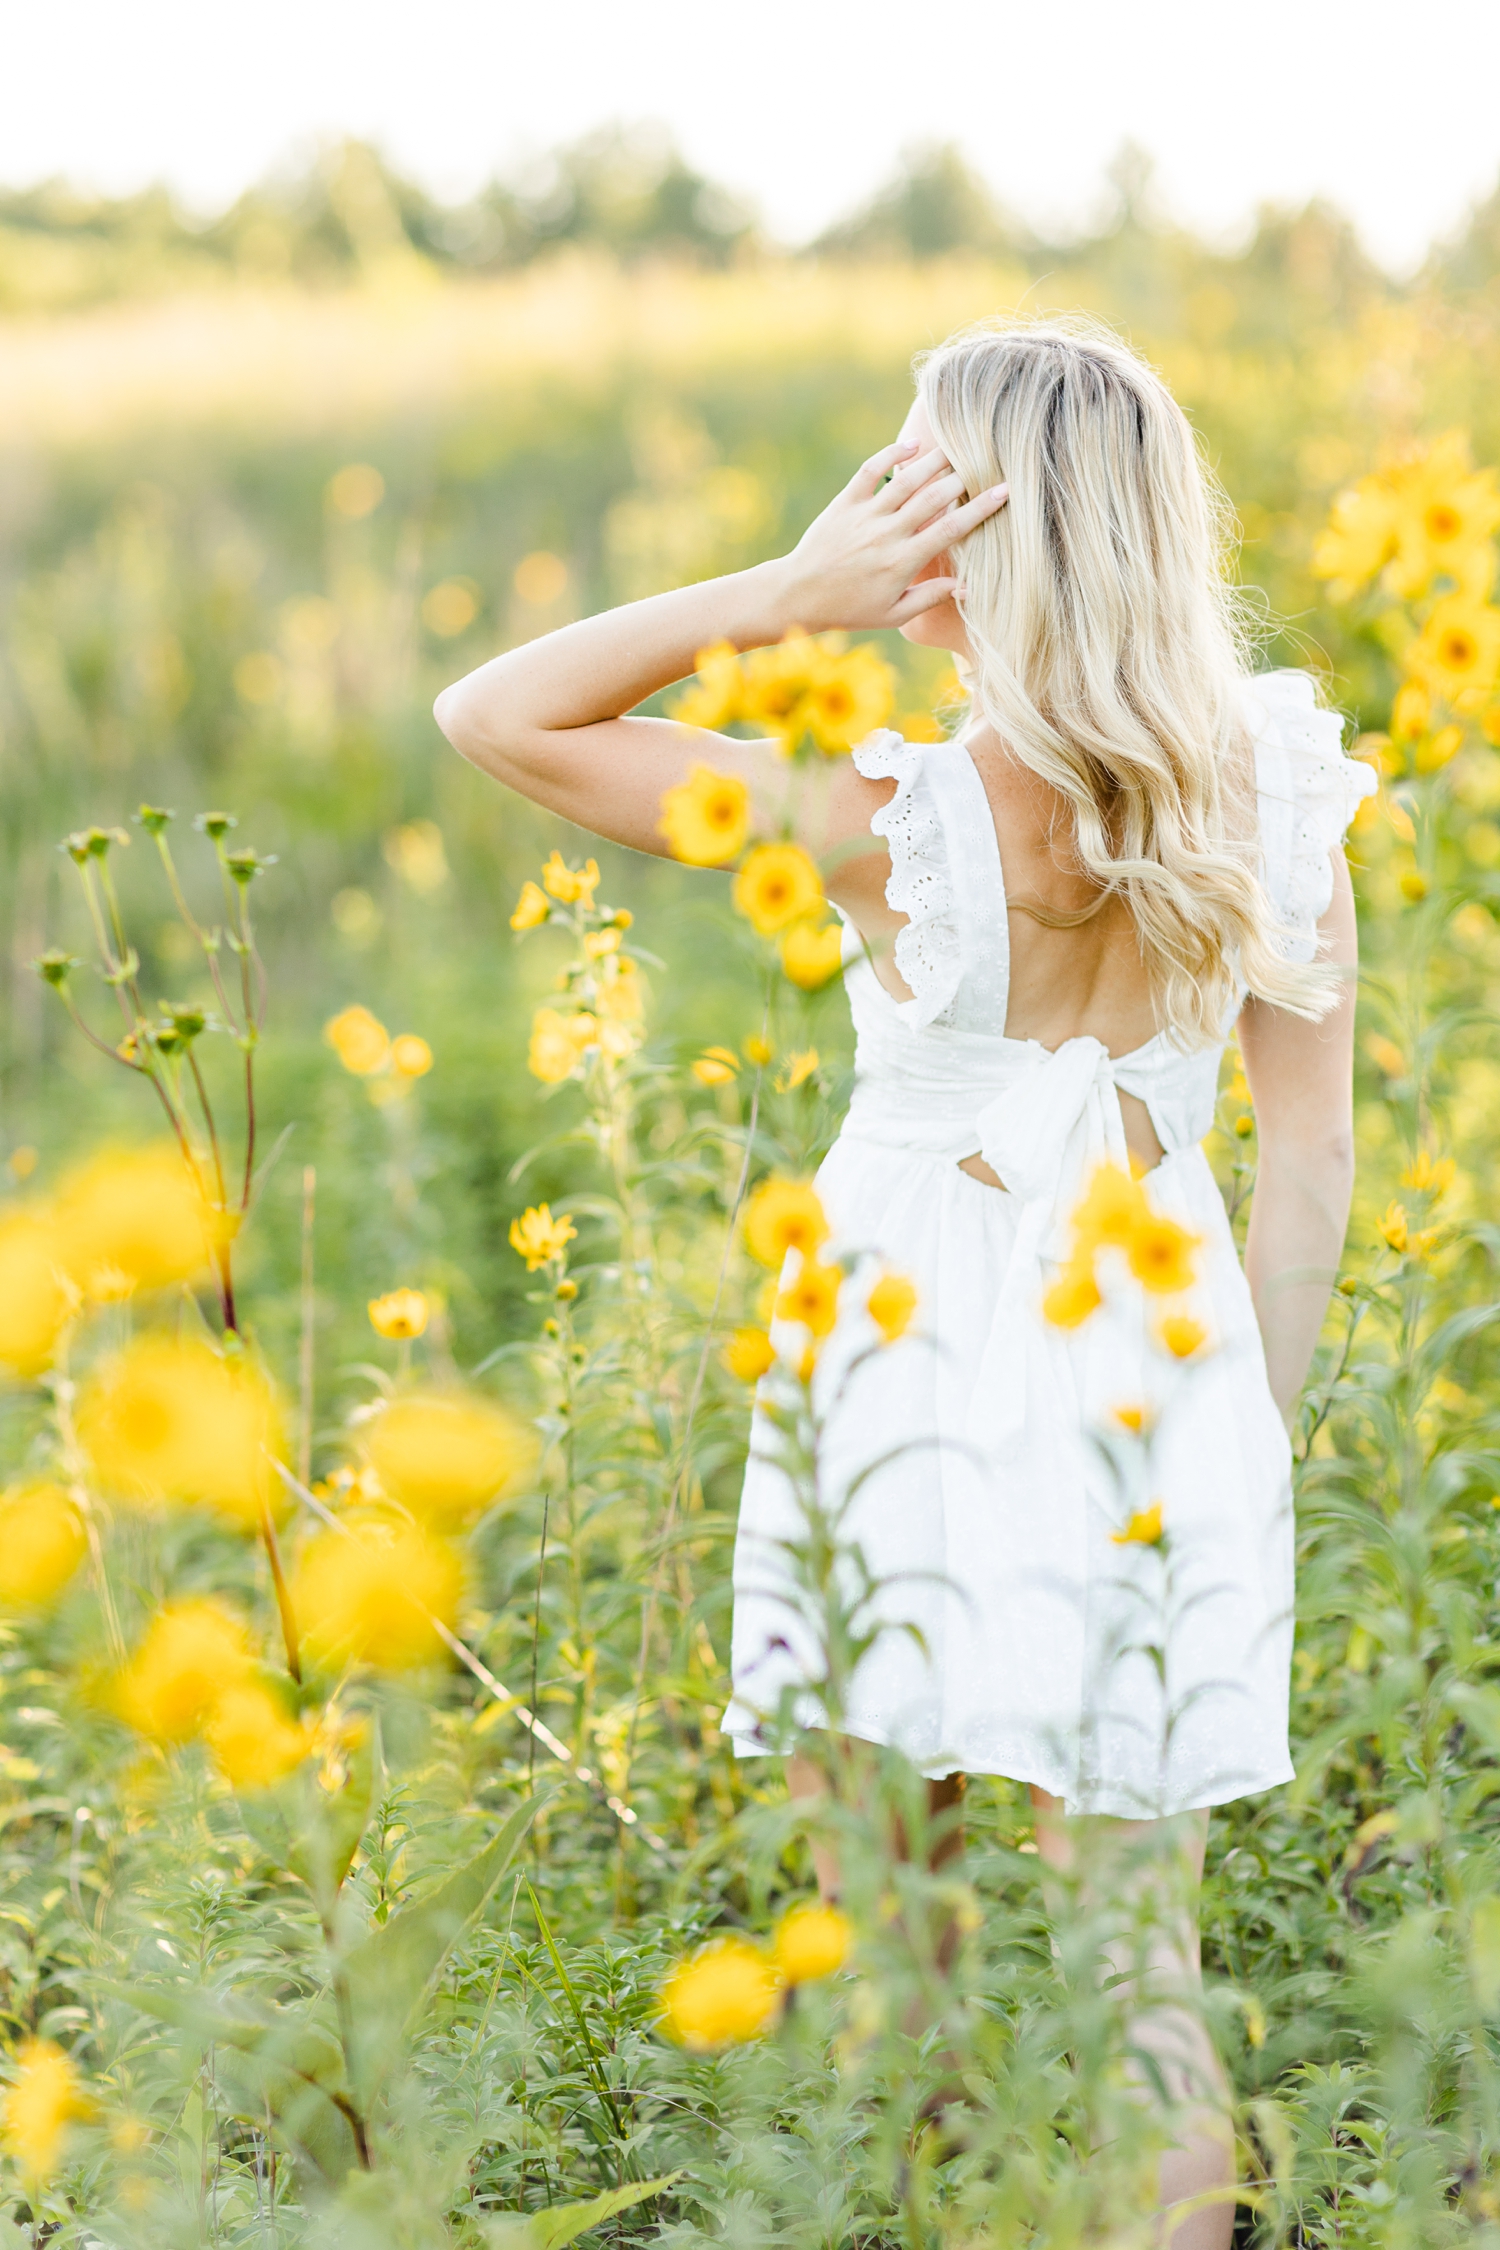 Shelby walks gracefully in a field of yellow wildflowers | CB Studio